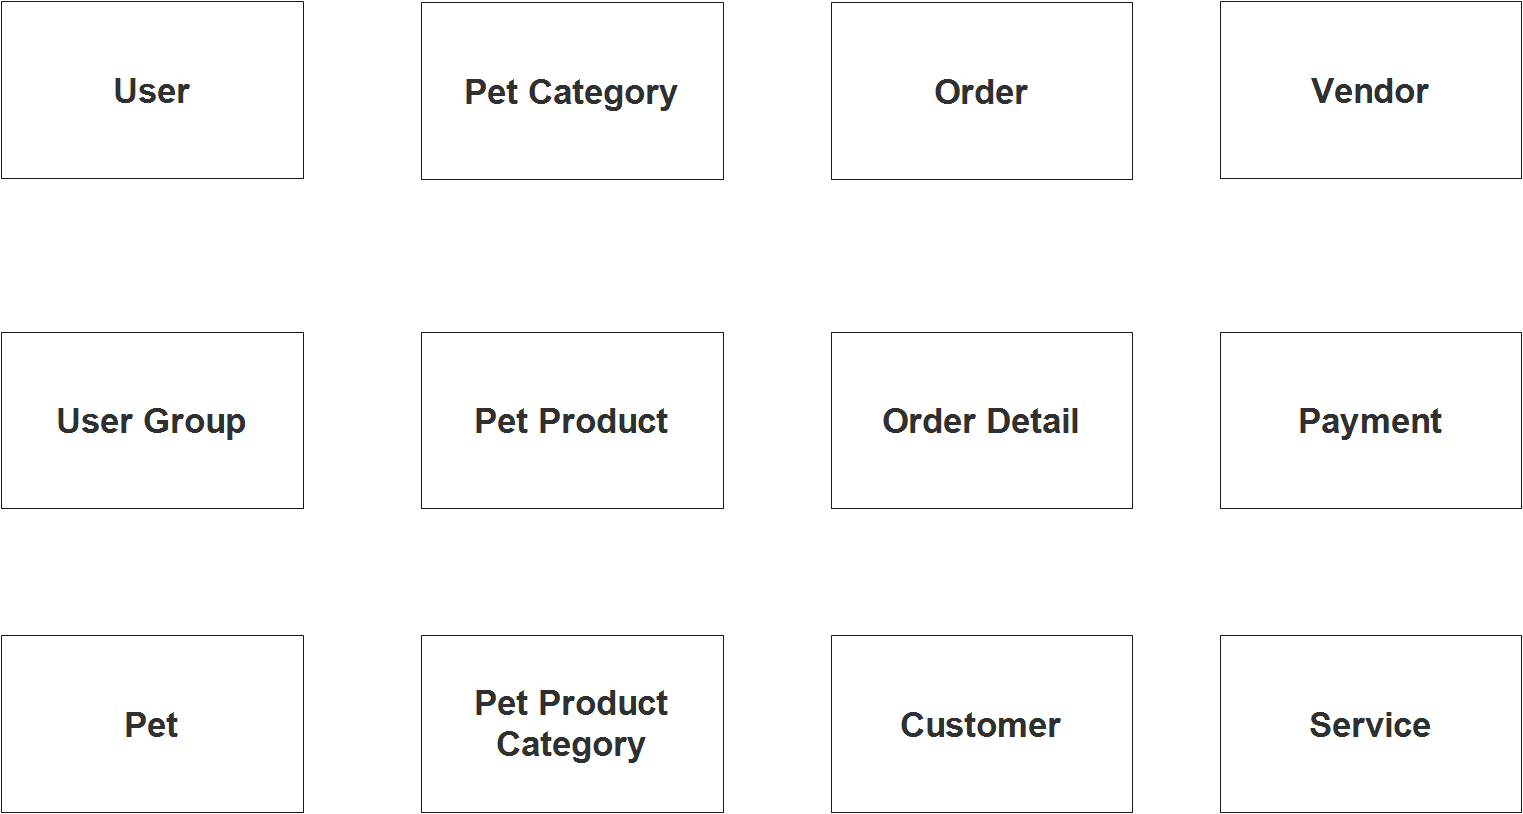 Pet Shop Management System ER Diagram - Step 1 Identify Entities